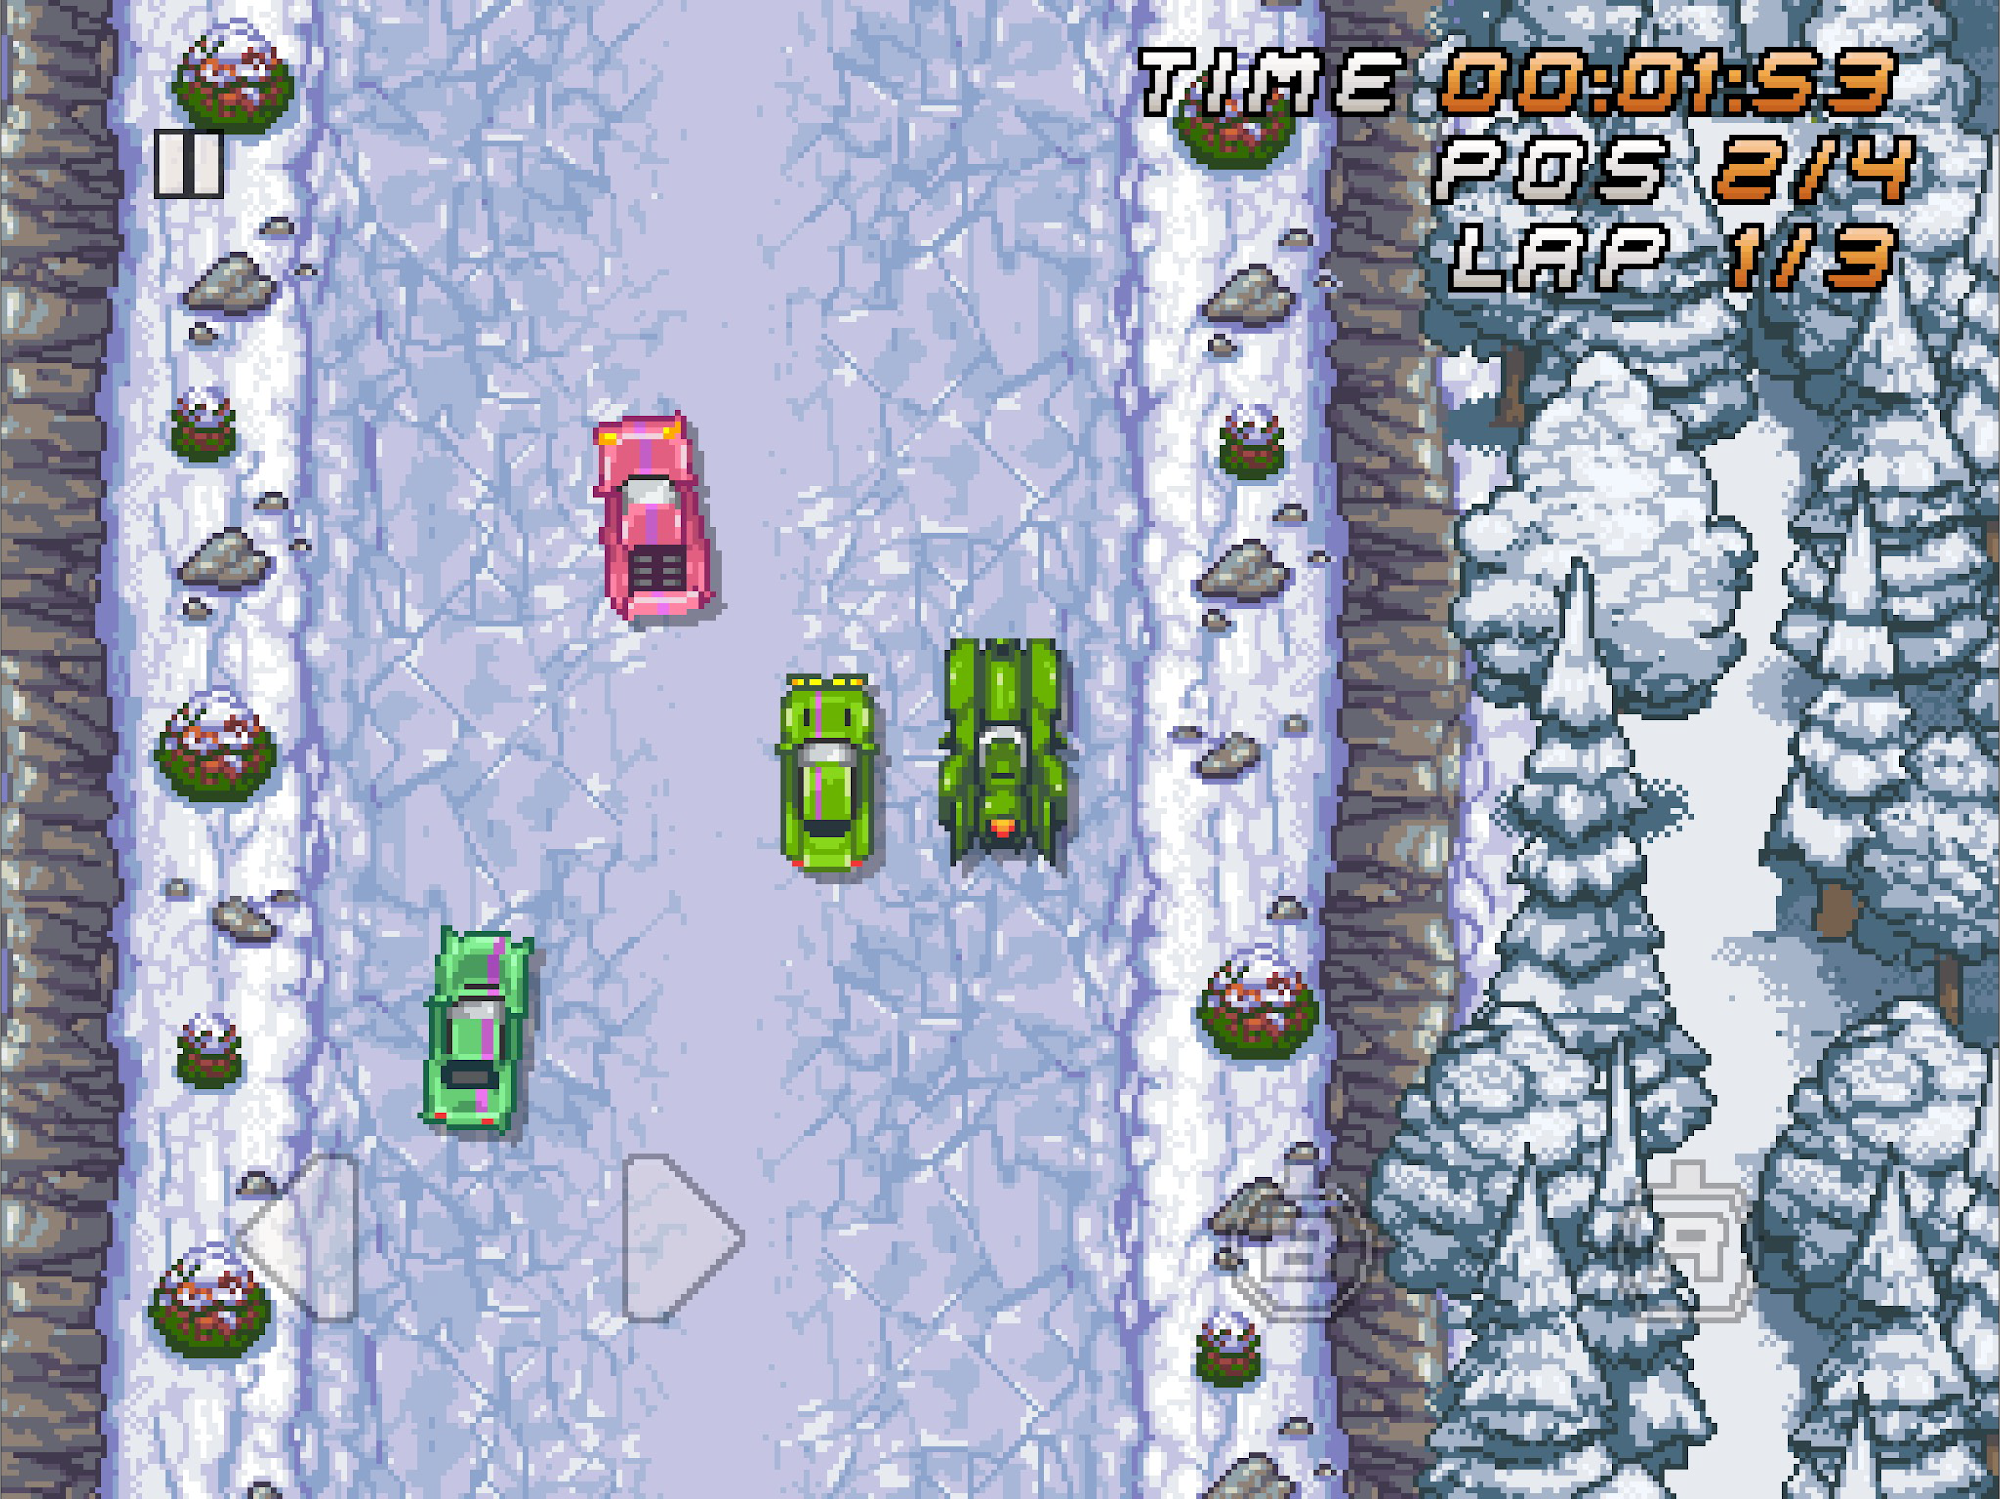 supercars racing arcade game image